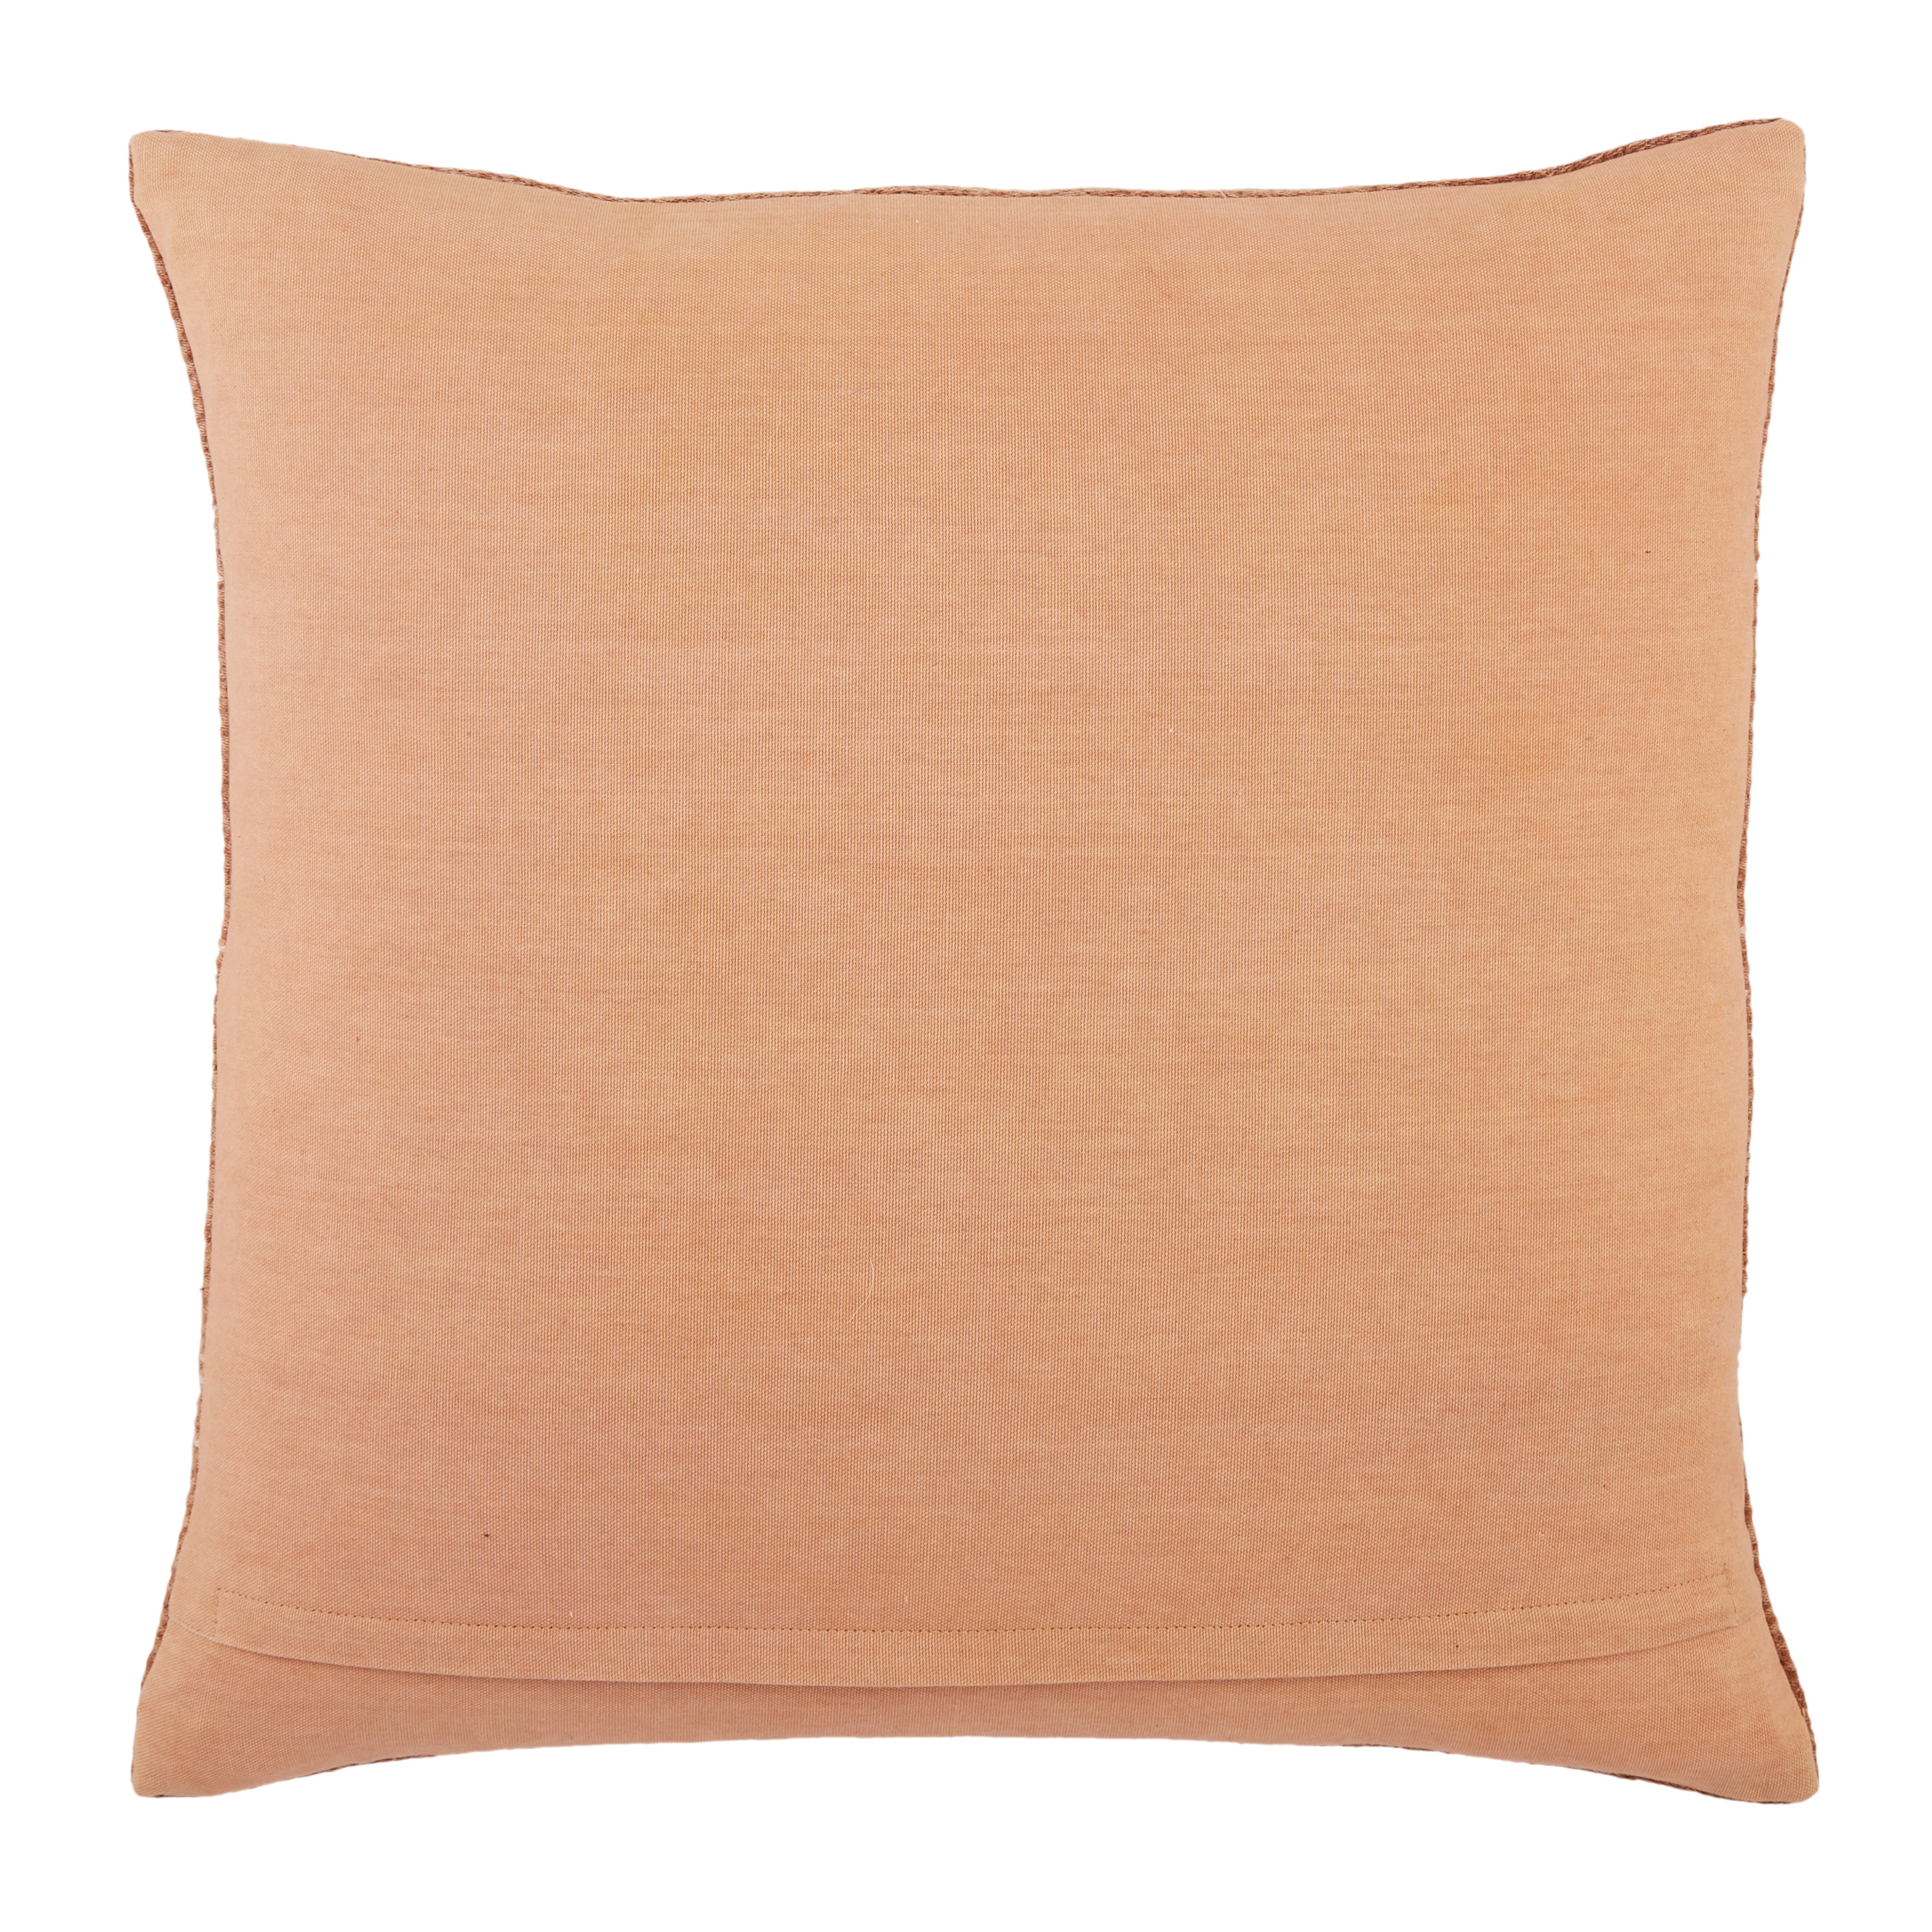 Design (US) Terracotta 20"X20" Pillow - Image 1